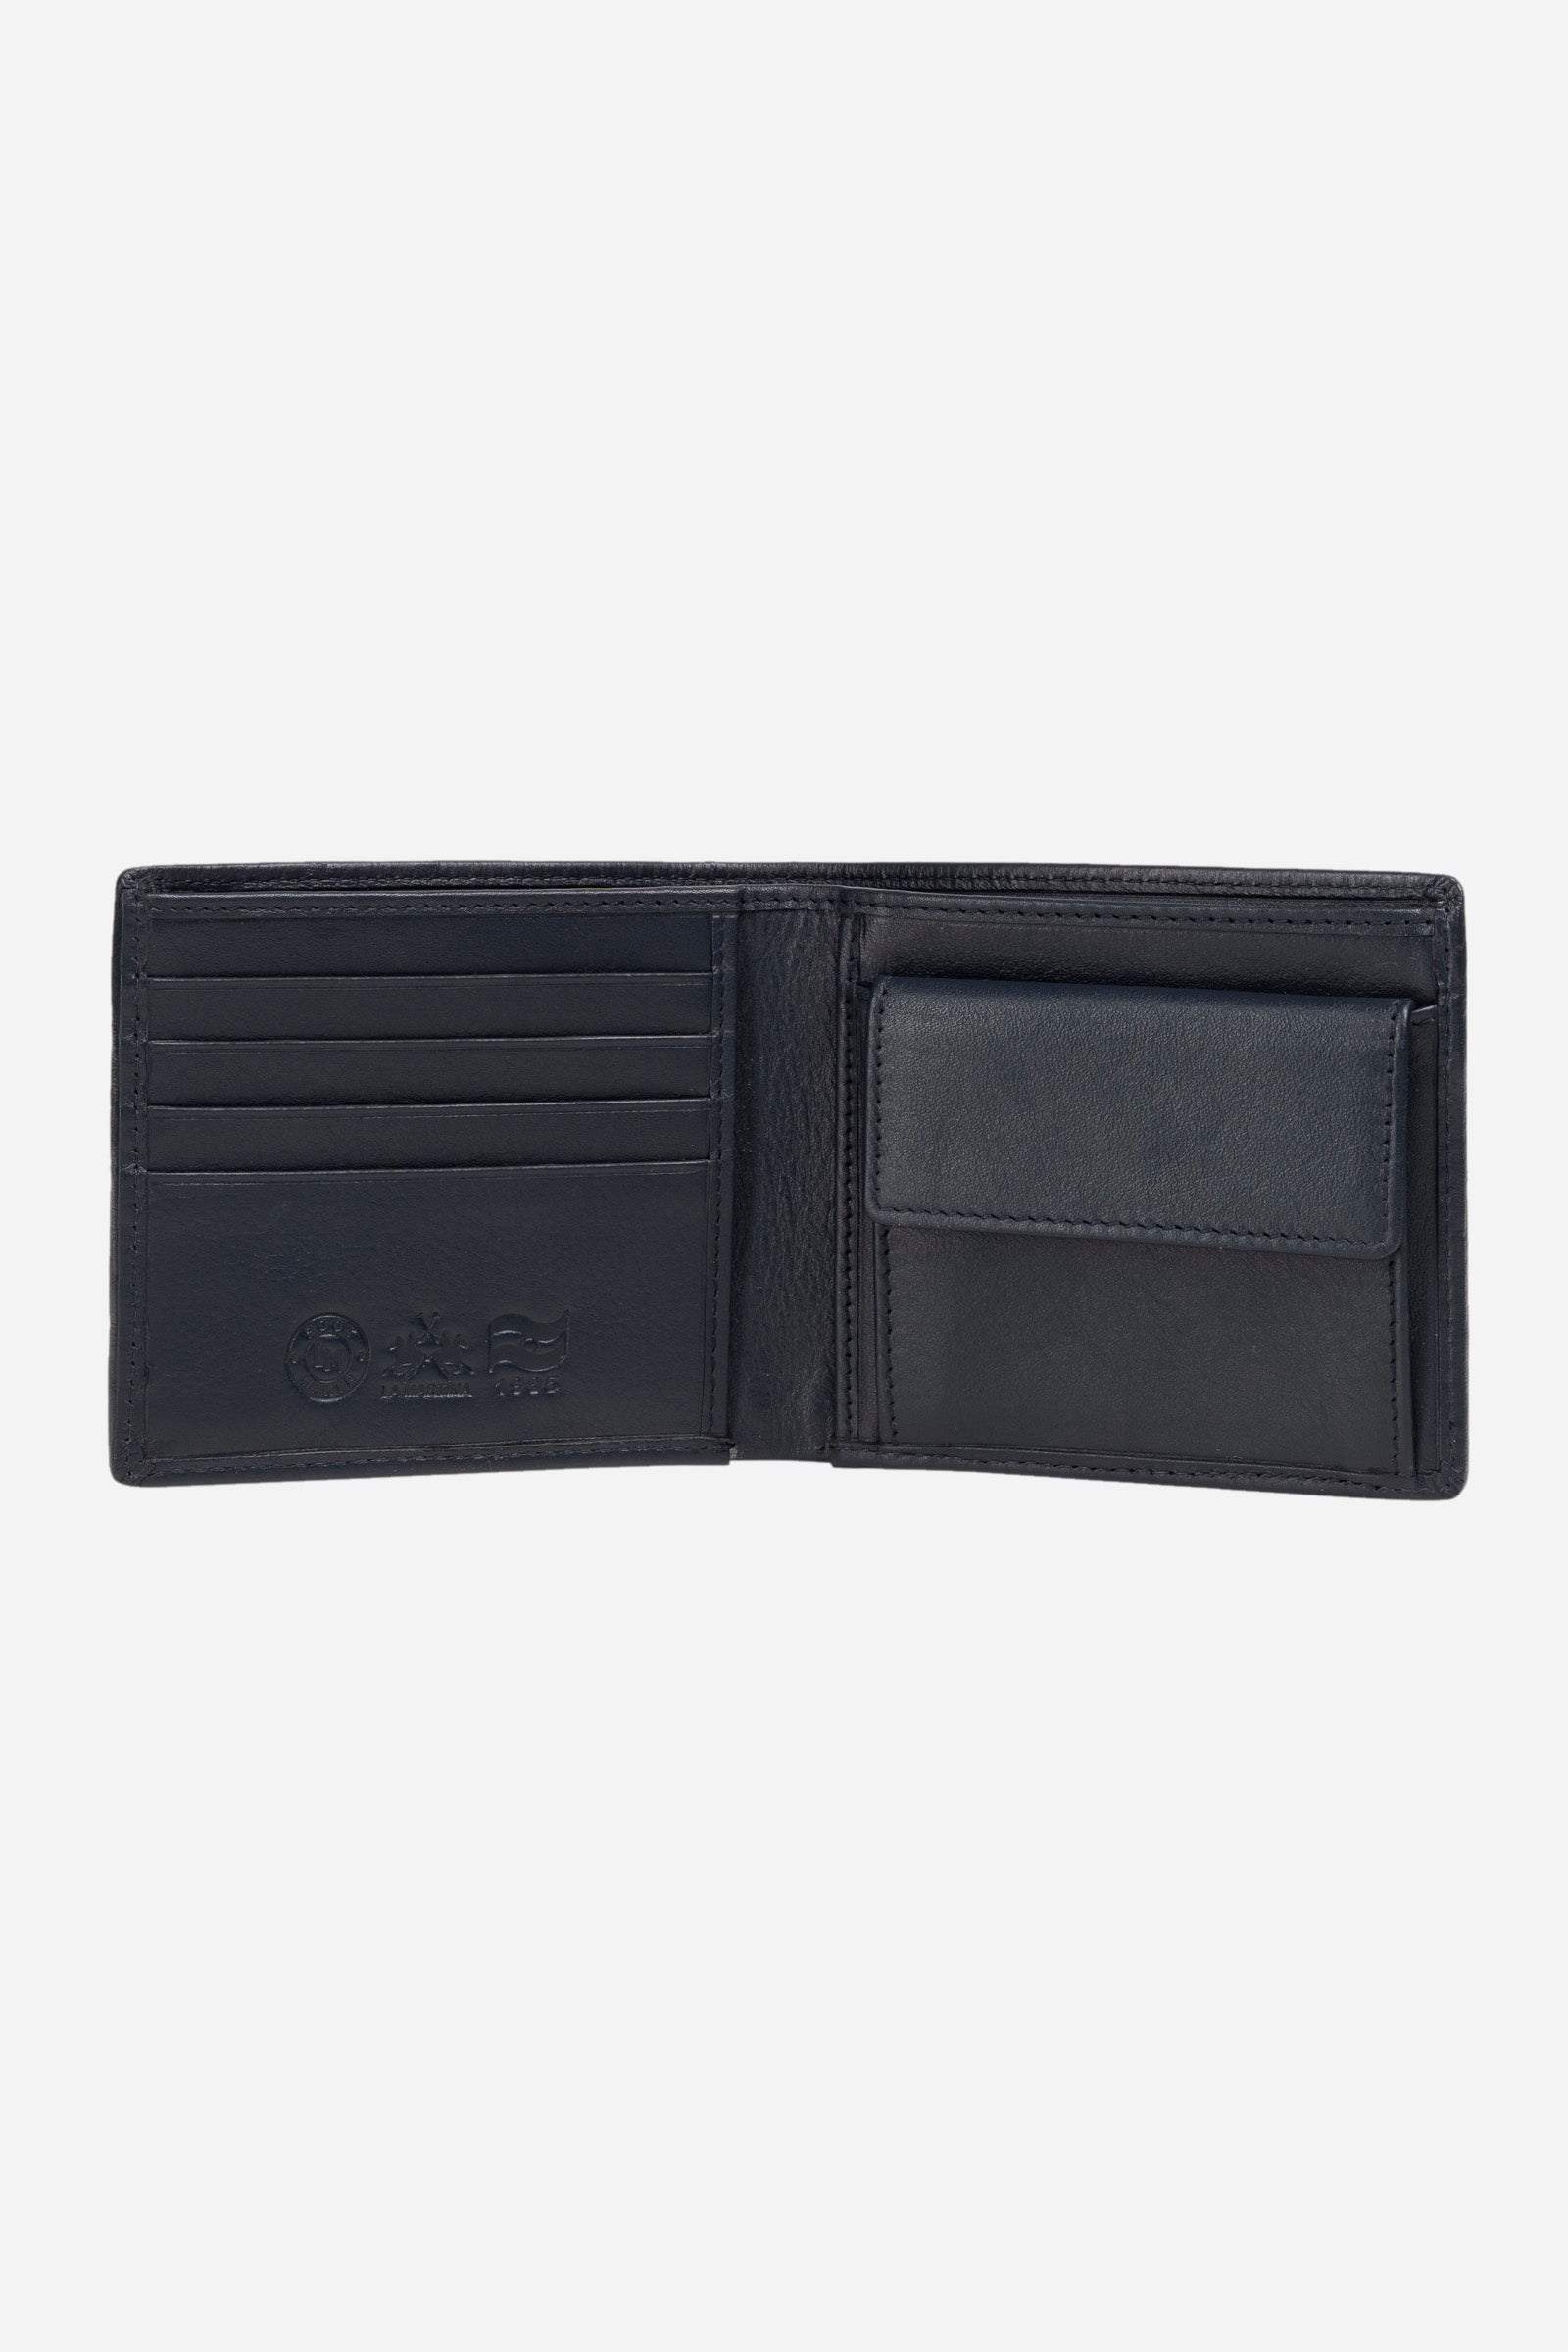 Leather wallet - Lopez